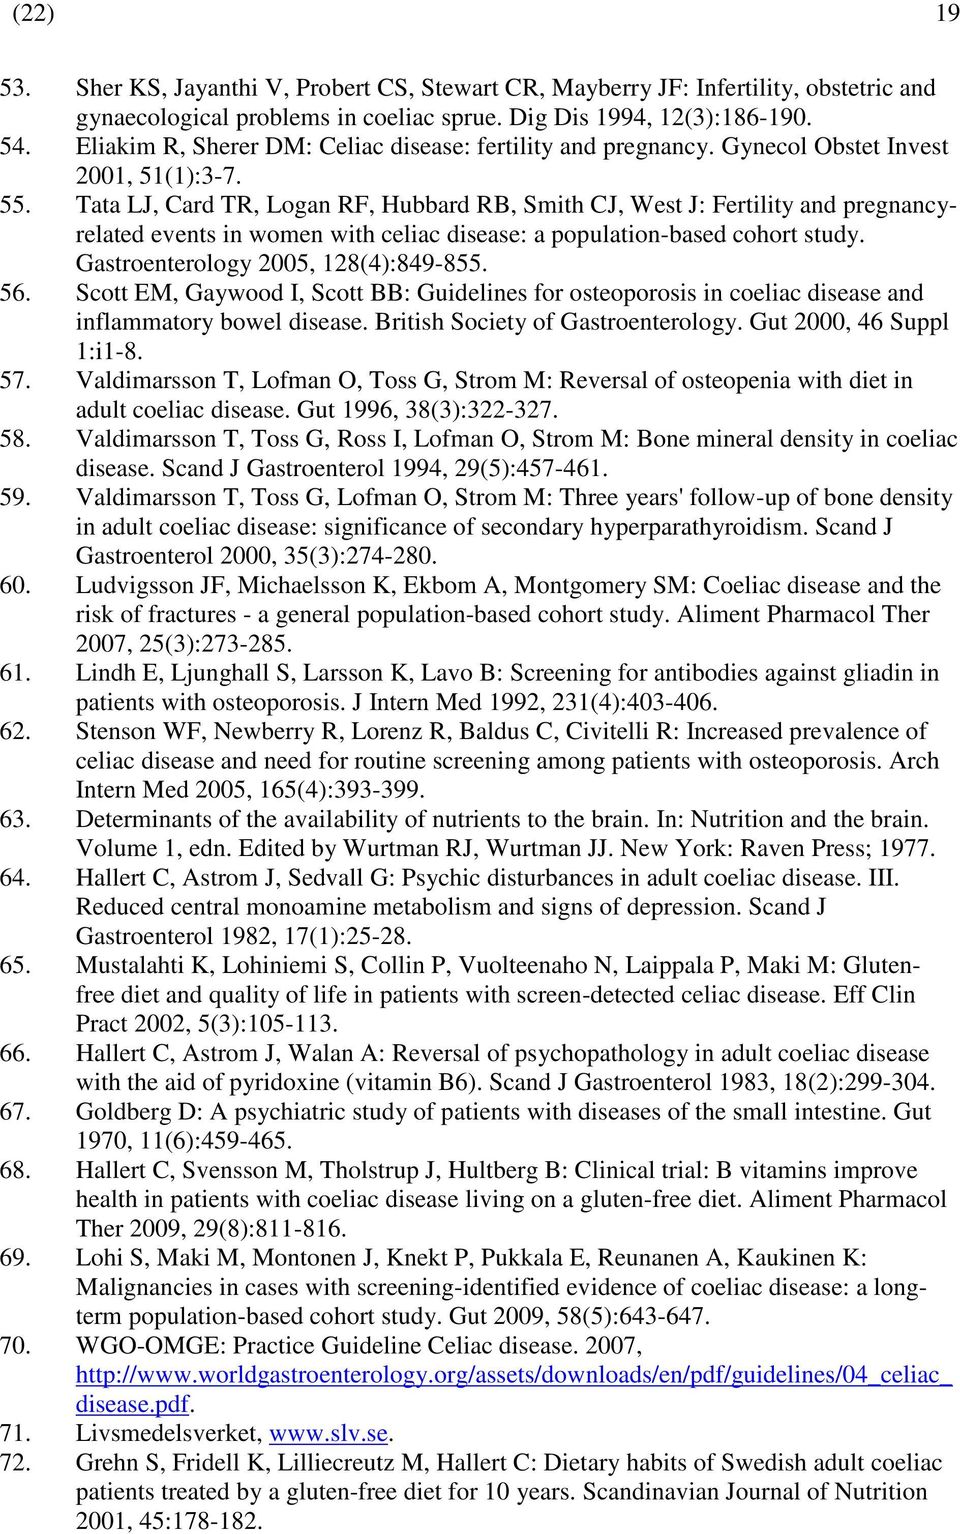 Tata LJ, Card TR, Logan RF, Hubbard RB, Smith CJ, West J: Fertility and pregnancyrelated events in women with celiac disease: a population-based cohort study. Gastroenterology 2005, 128(4):849-855.